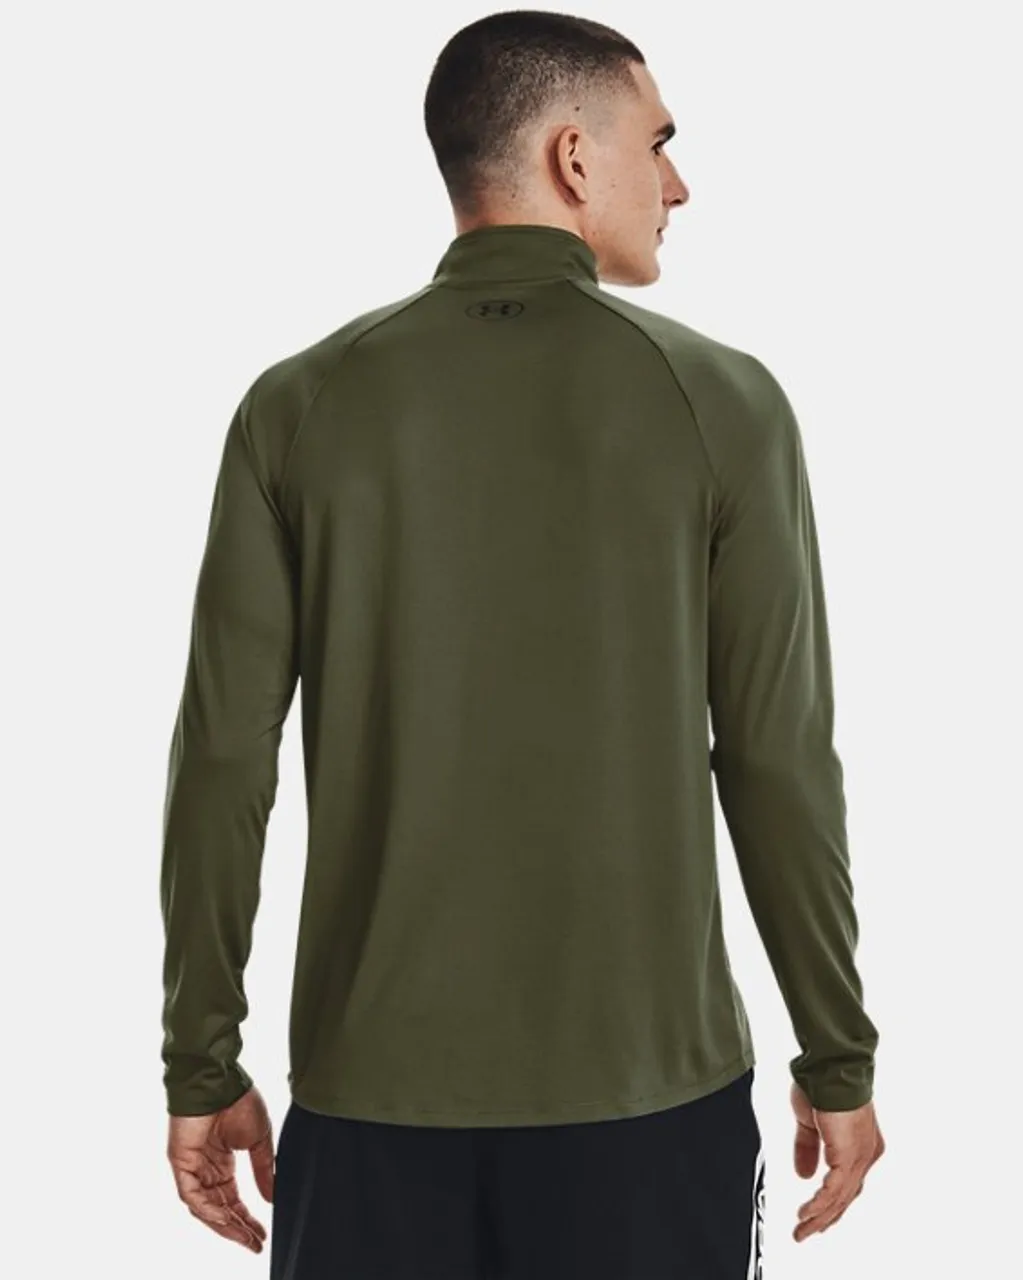 Men's  Under Armour  Tech™ ½ Zip Long Sleeve Marine OD Green / Black